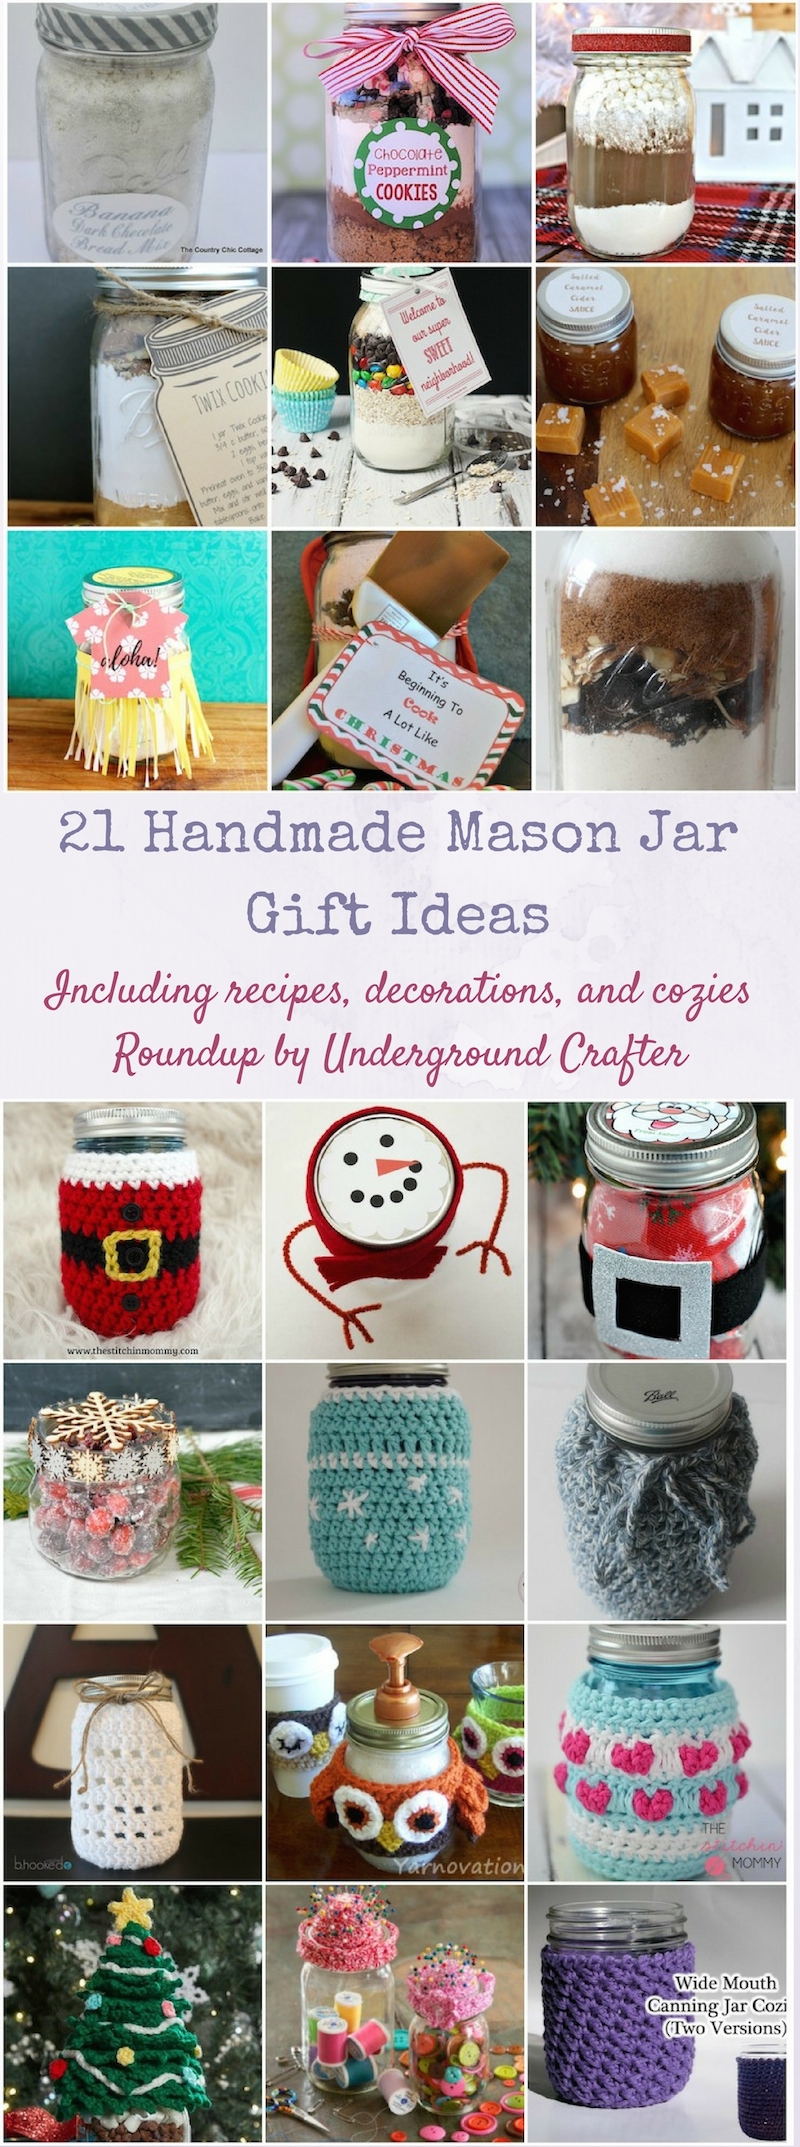 21 Handmade Mason Jar Gift Ideas via Underground Crafter | This roundup includes great ideas for the winter holidays, including jar mix recipes, mason jar decorations, and crochet mason jar cozies!